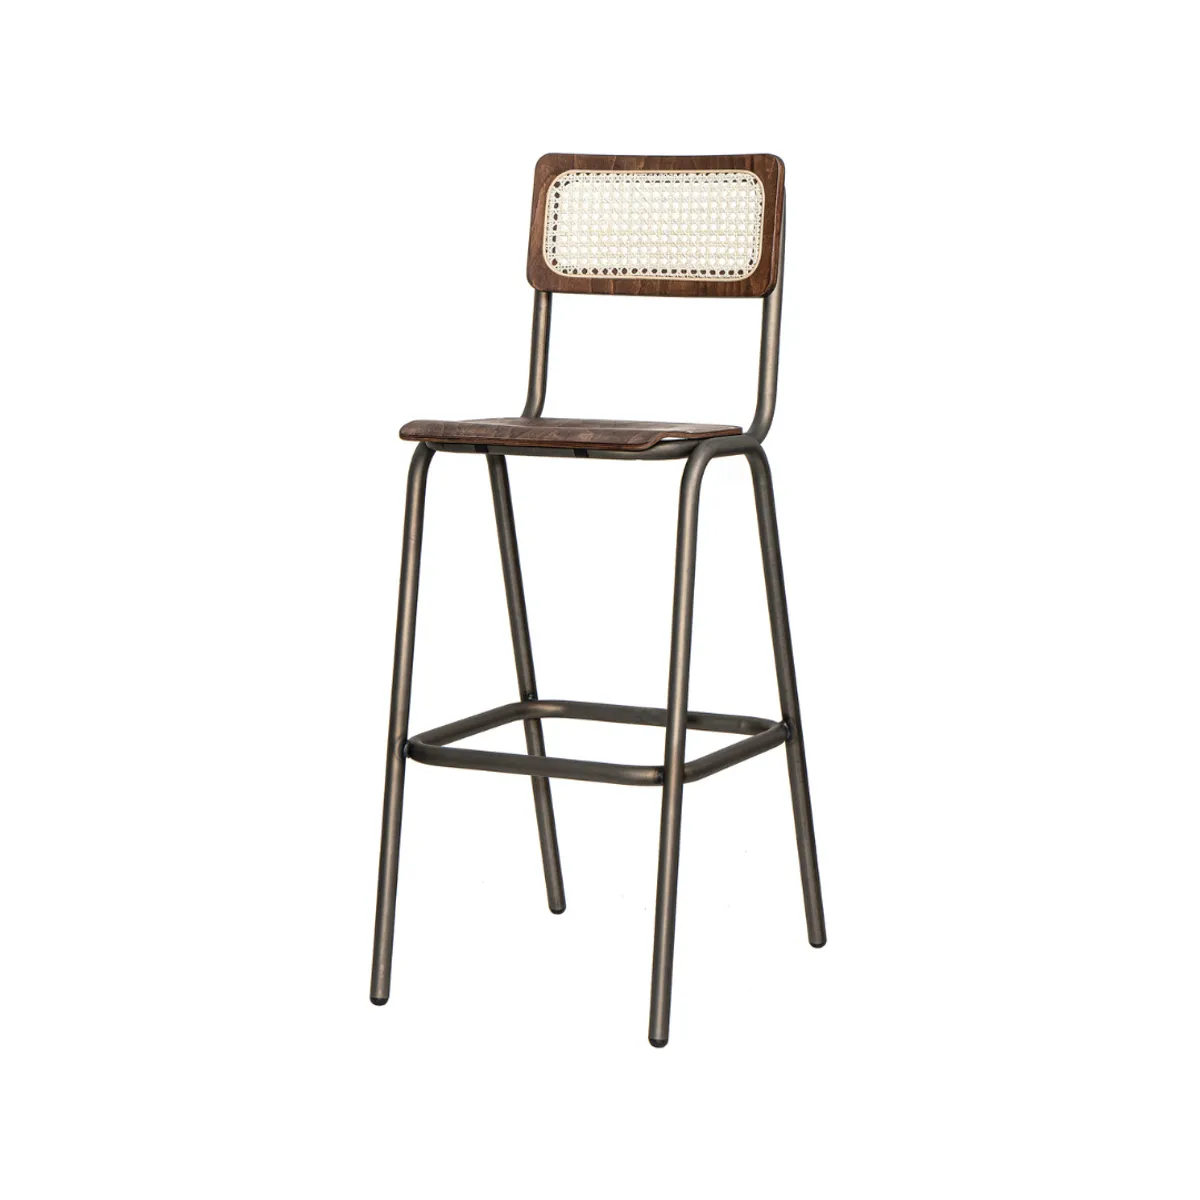 Colton bar stool